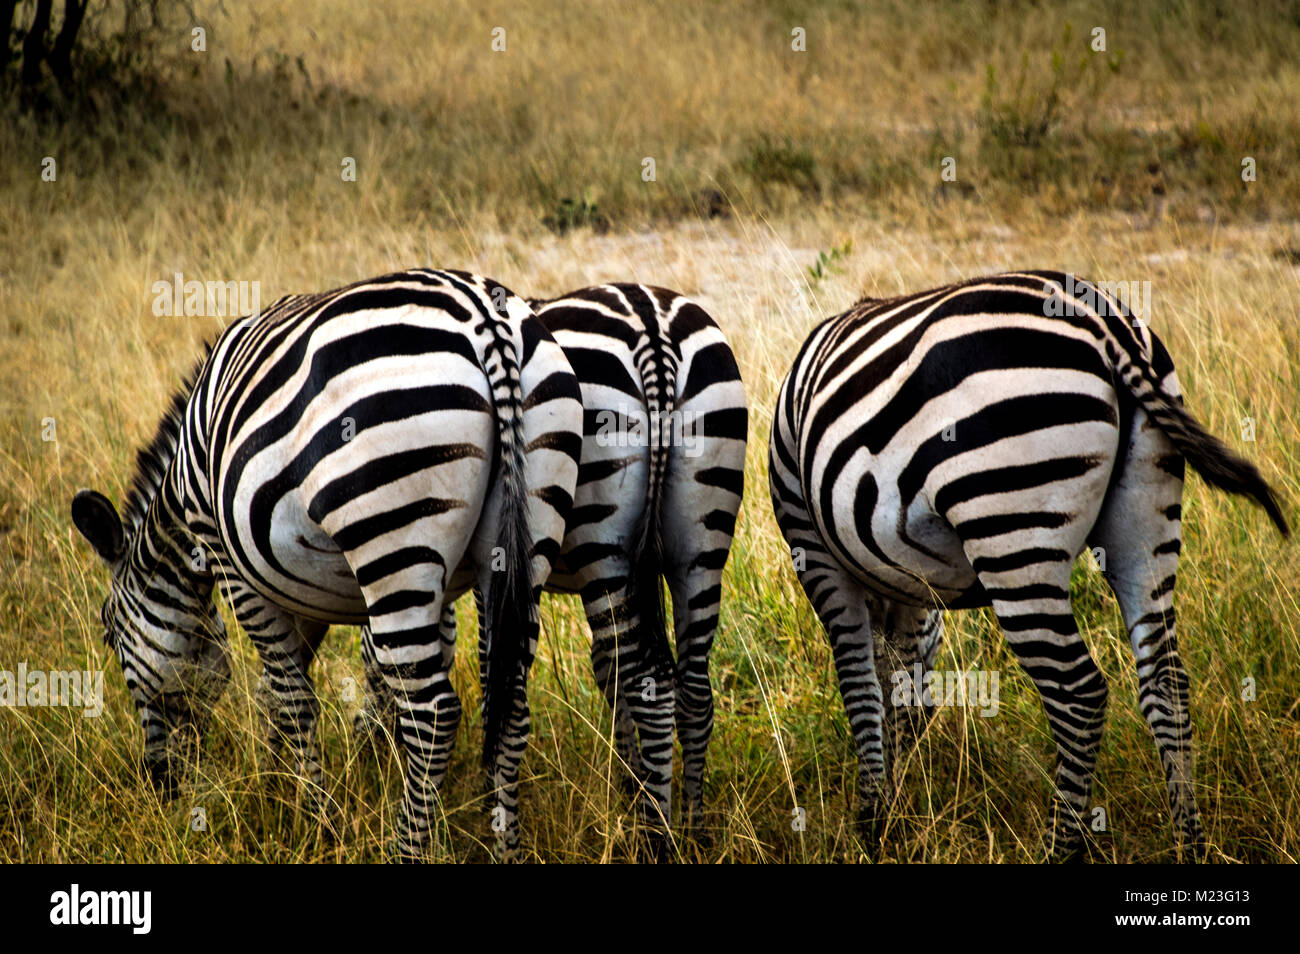 Zebras eating in Africa Stock Photo